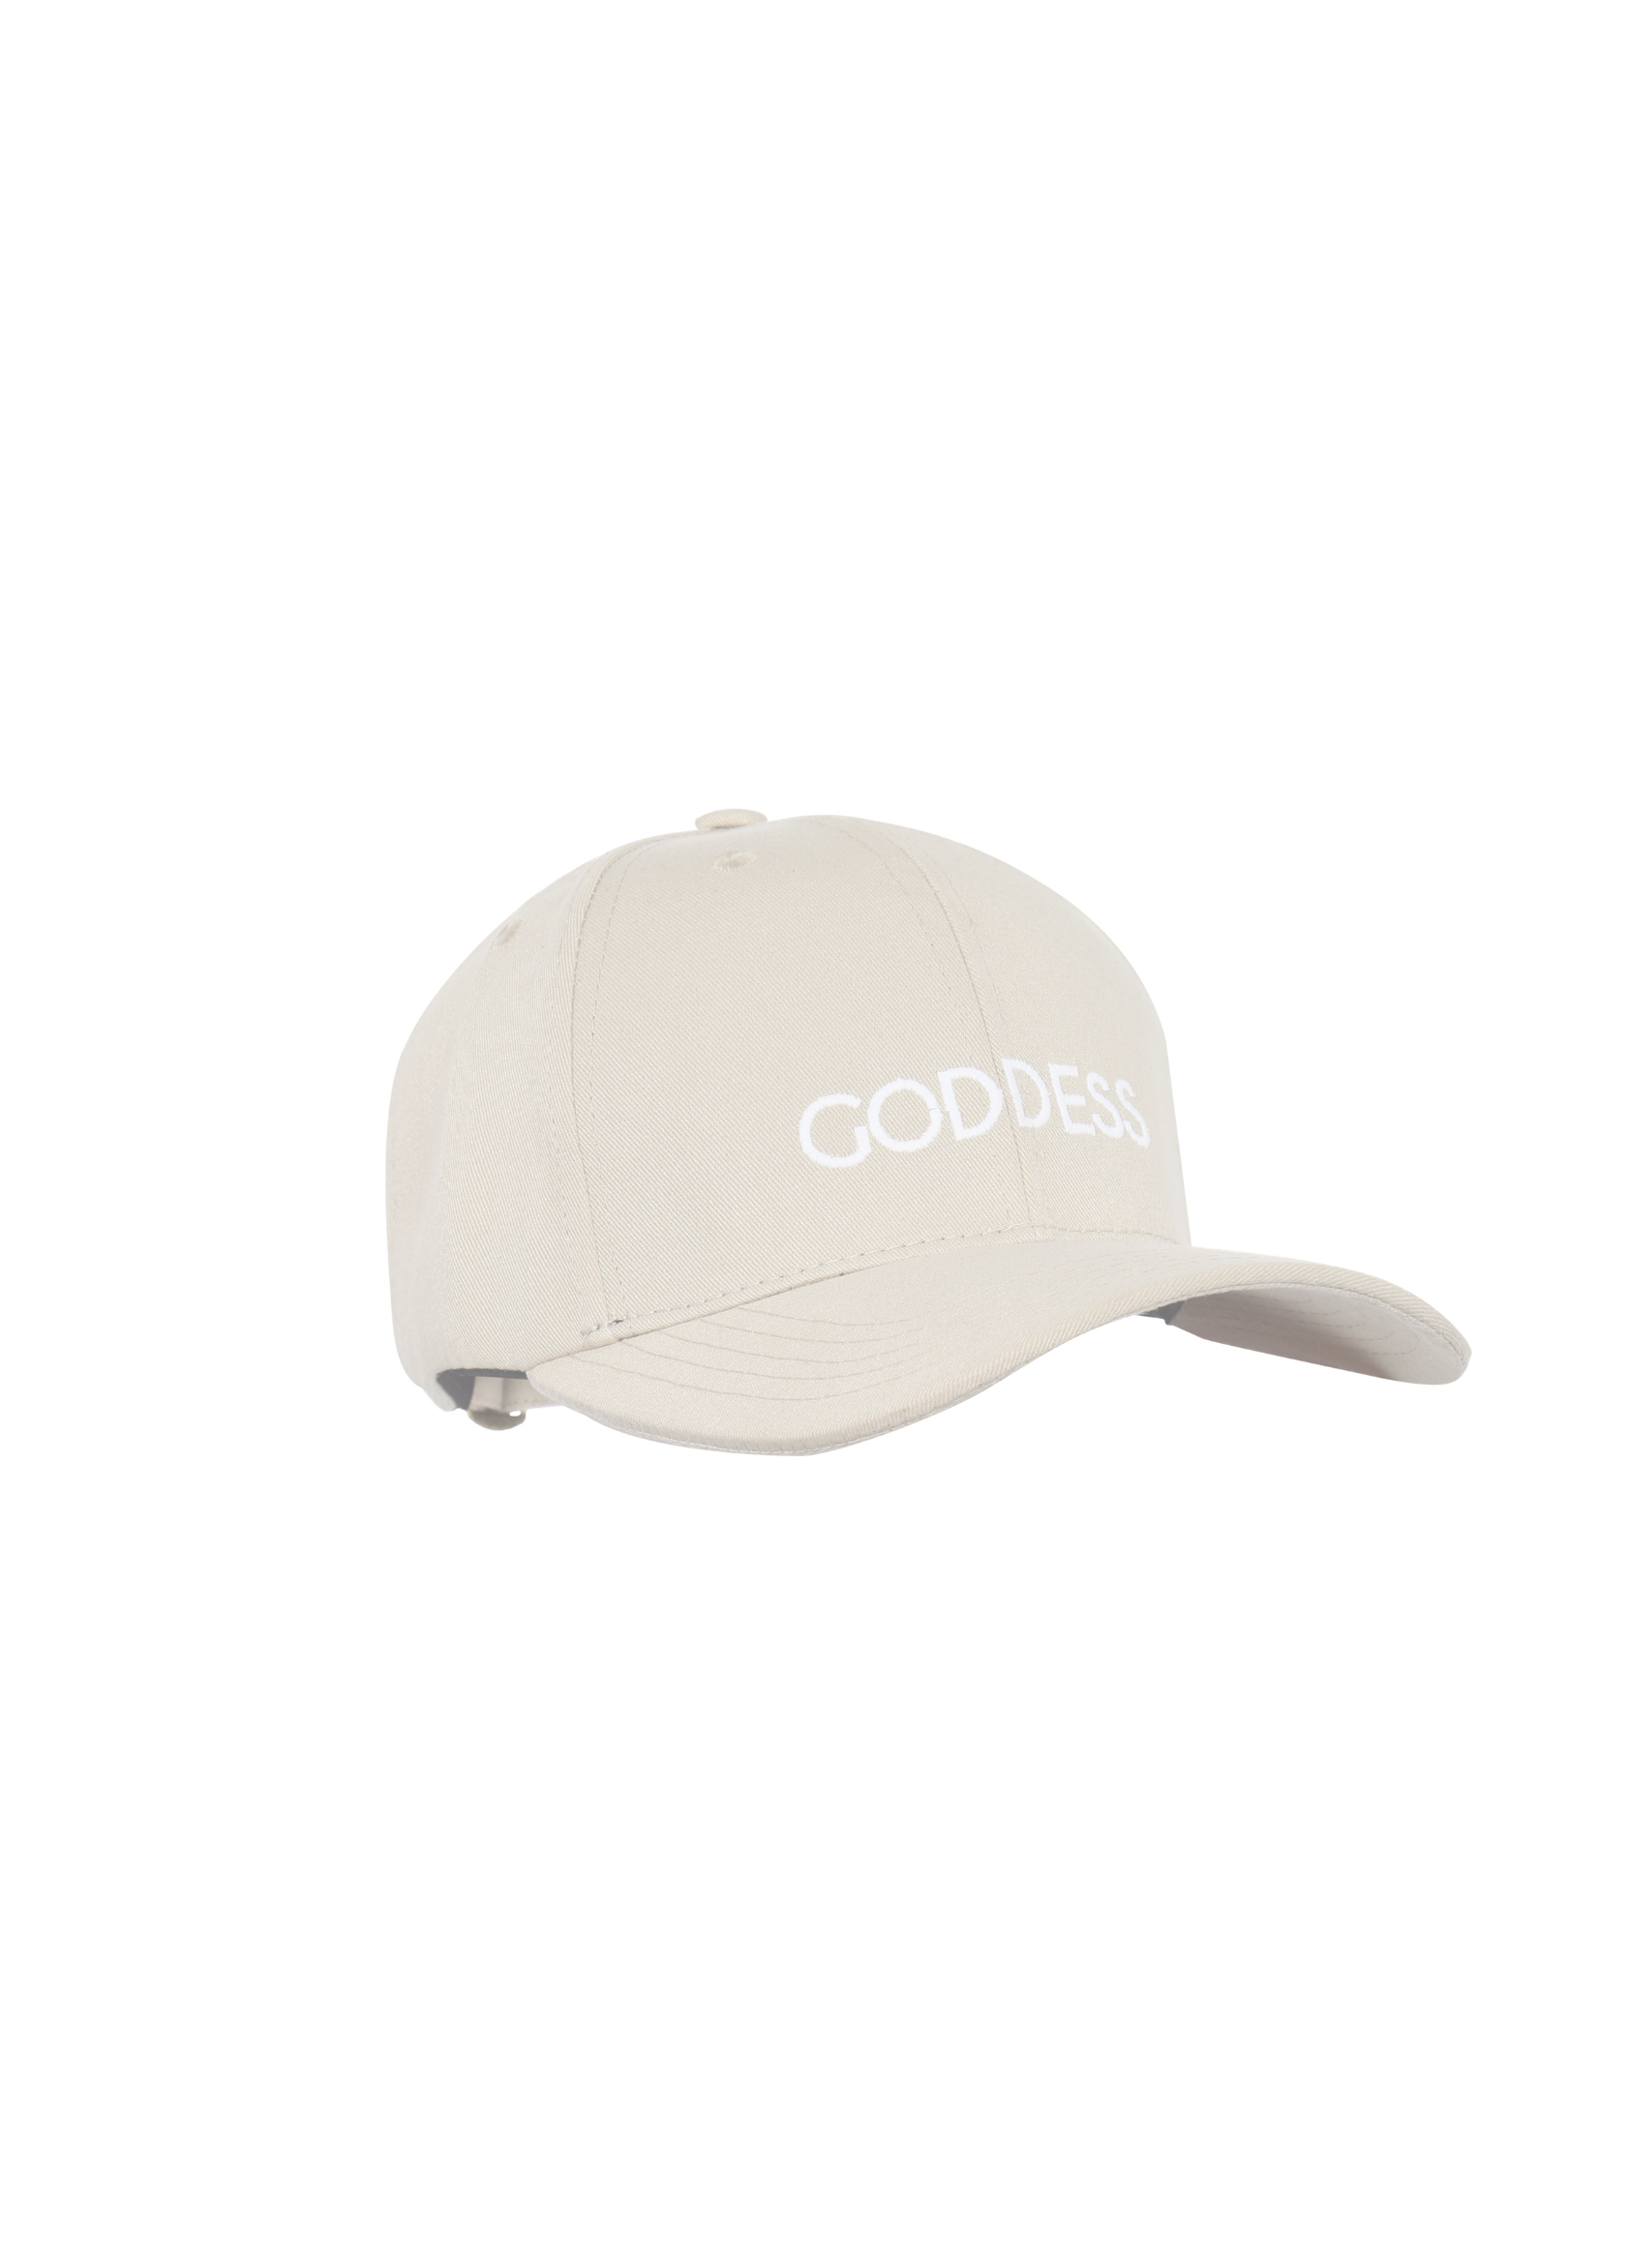 GODDESS BASEBALL CAP - NUDE